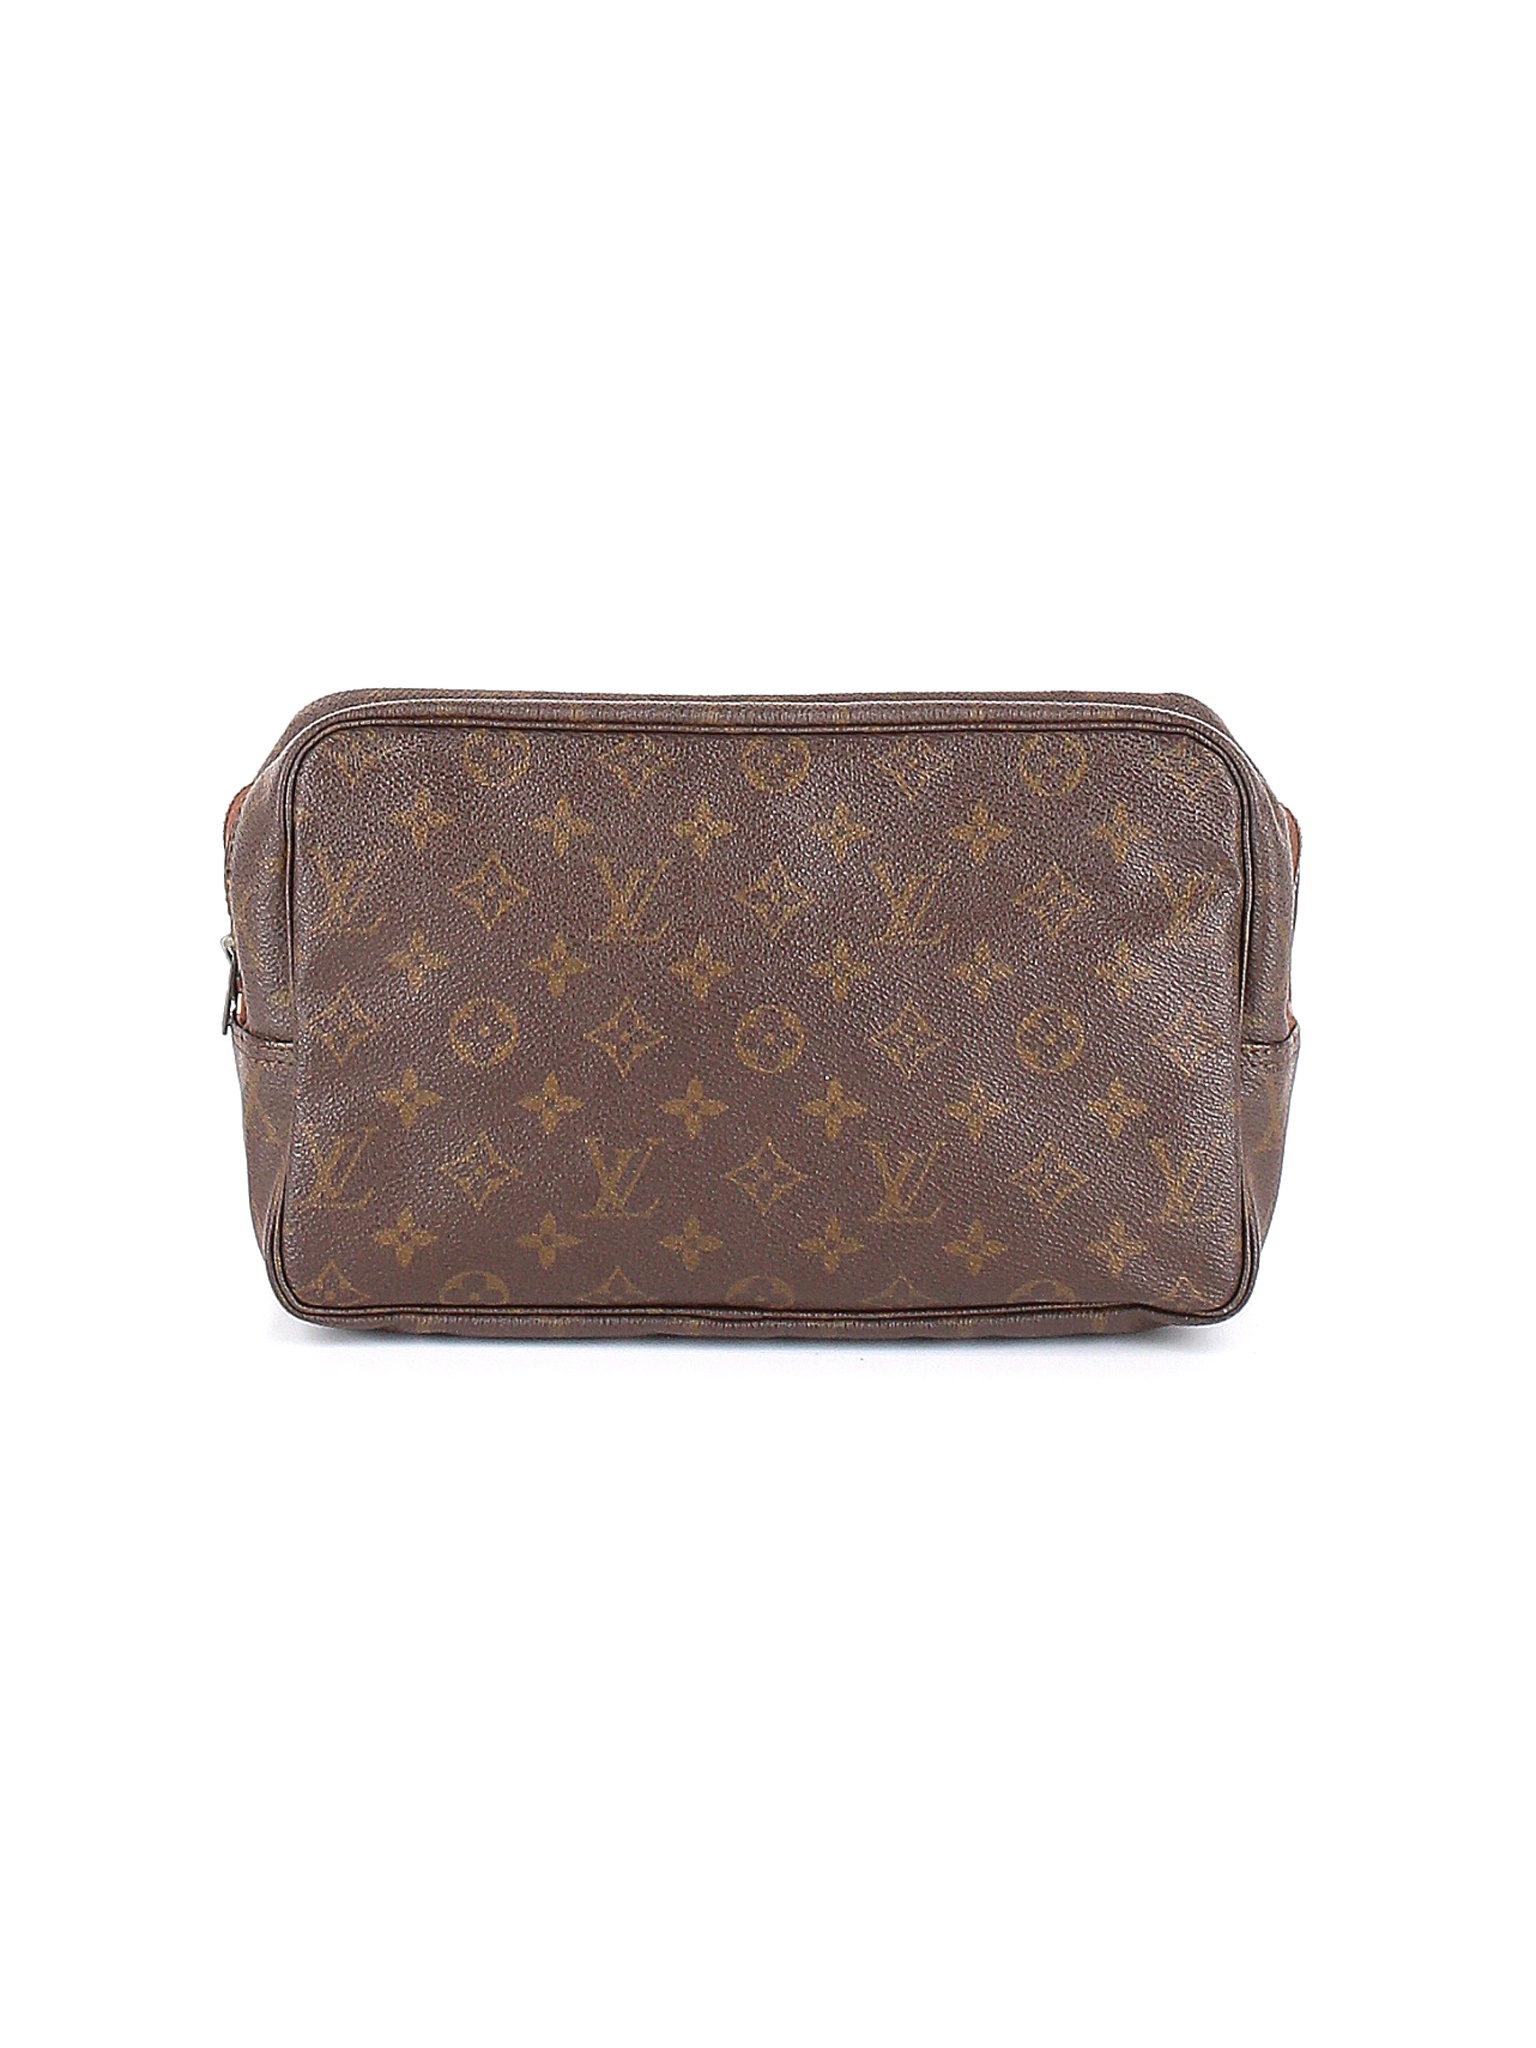 Louis Vuitton Women Brown Makeup Bag One Size | eBay